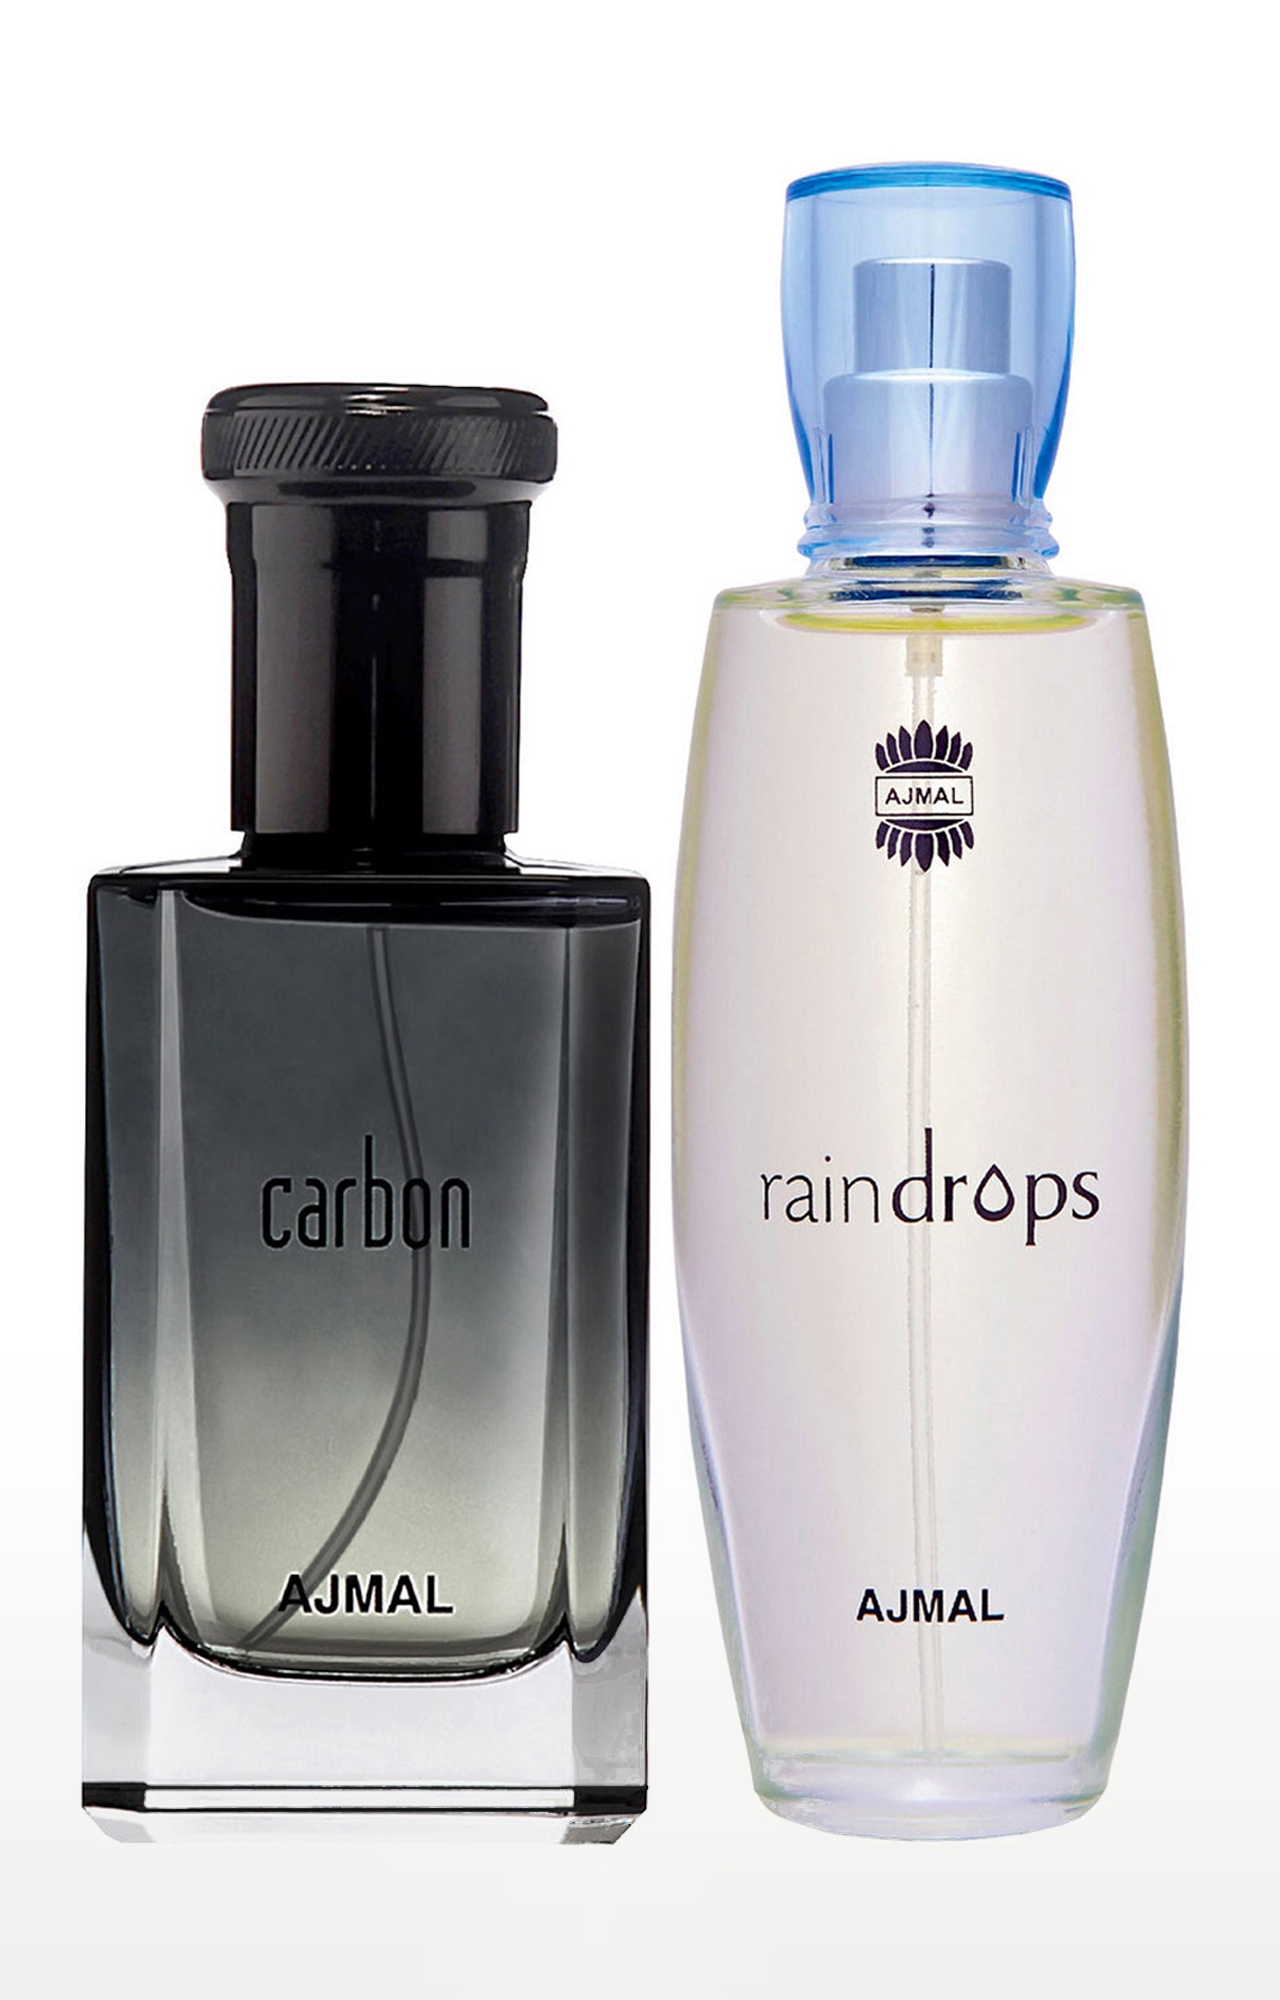 Ajmal Carbon EDP Perfume 100ml for Men and Raindrops EDP Perfume 50ml for Women